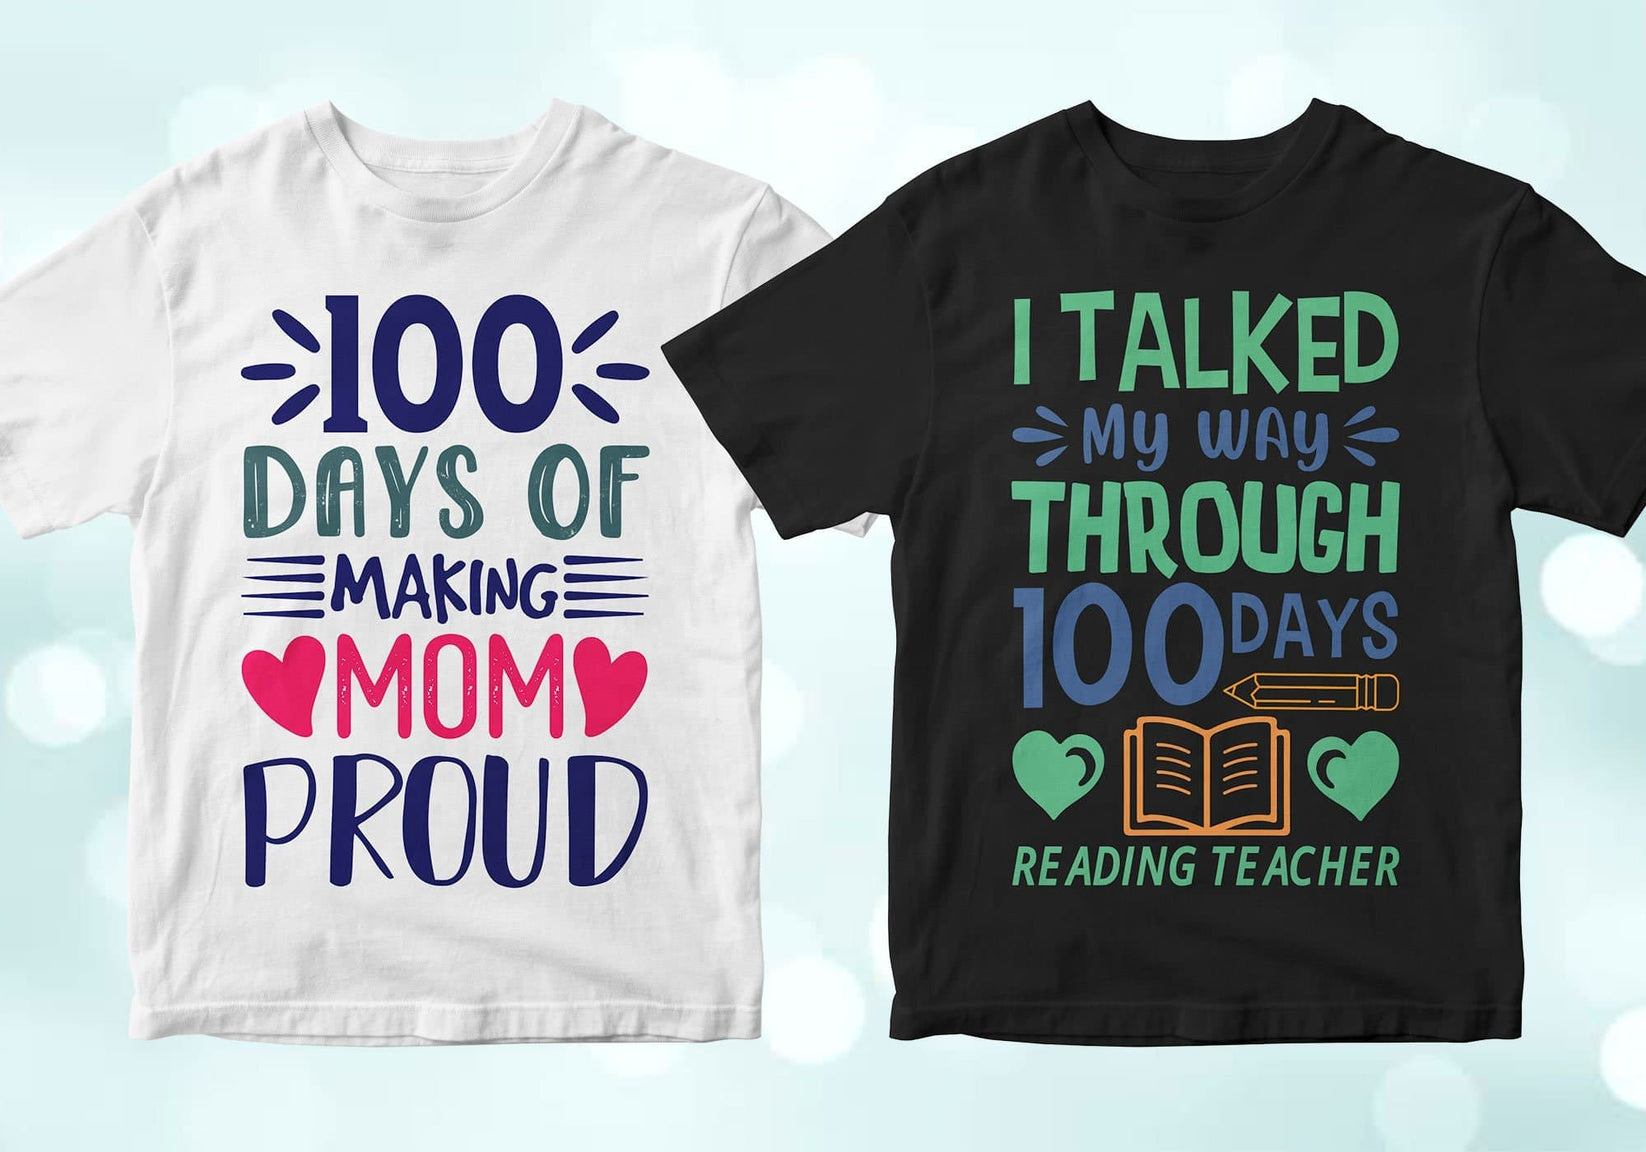 100 days of making mom proud, I talked my way through 100 days reading teacher